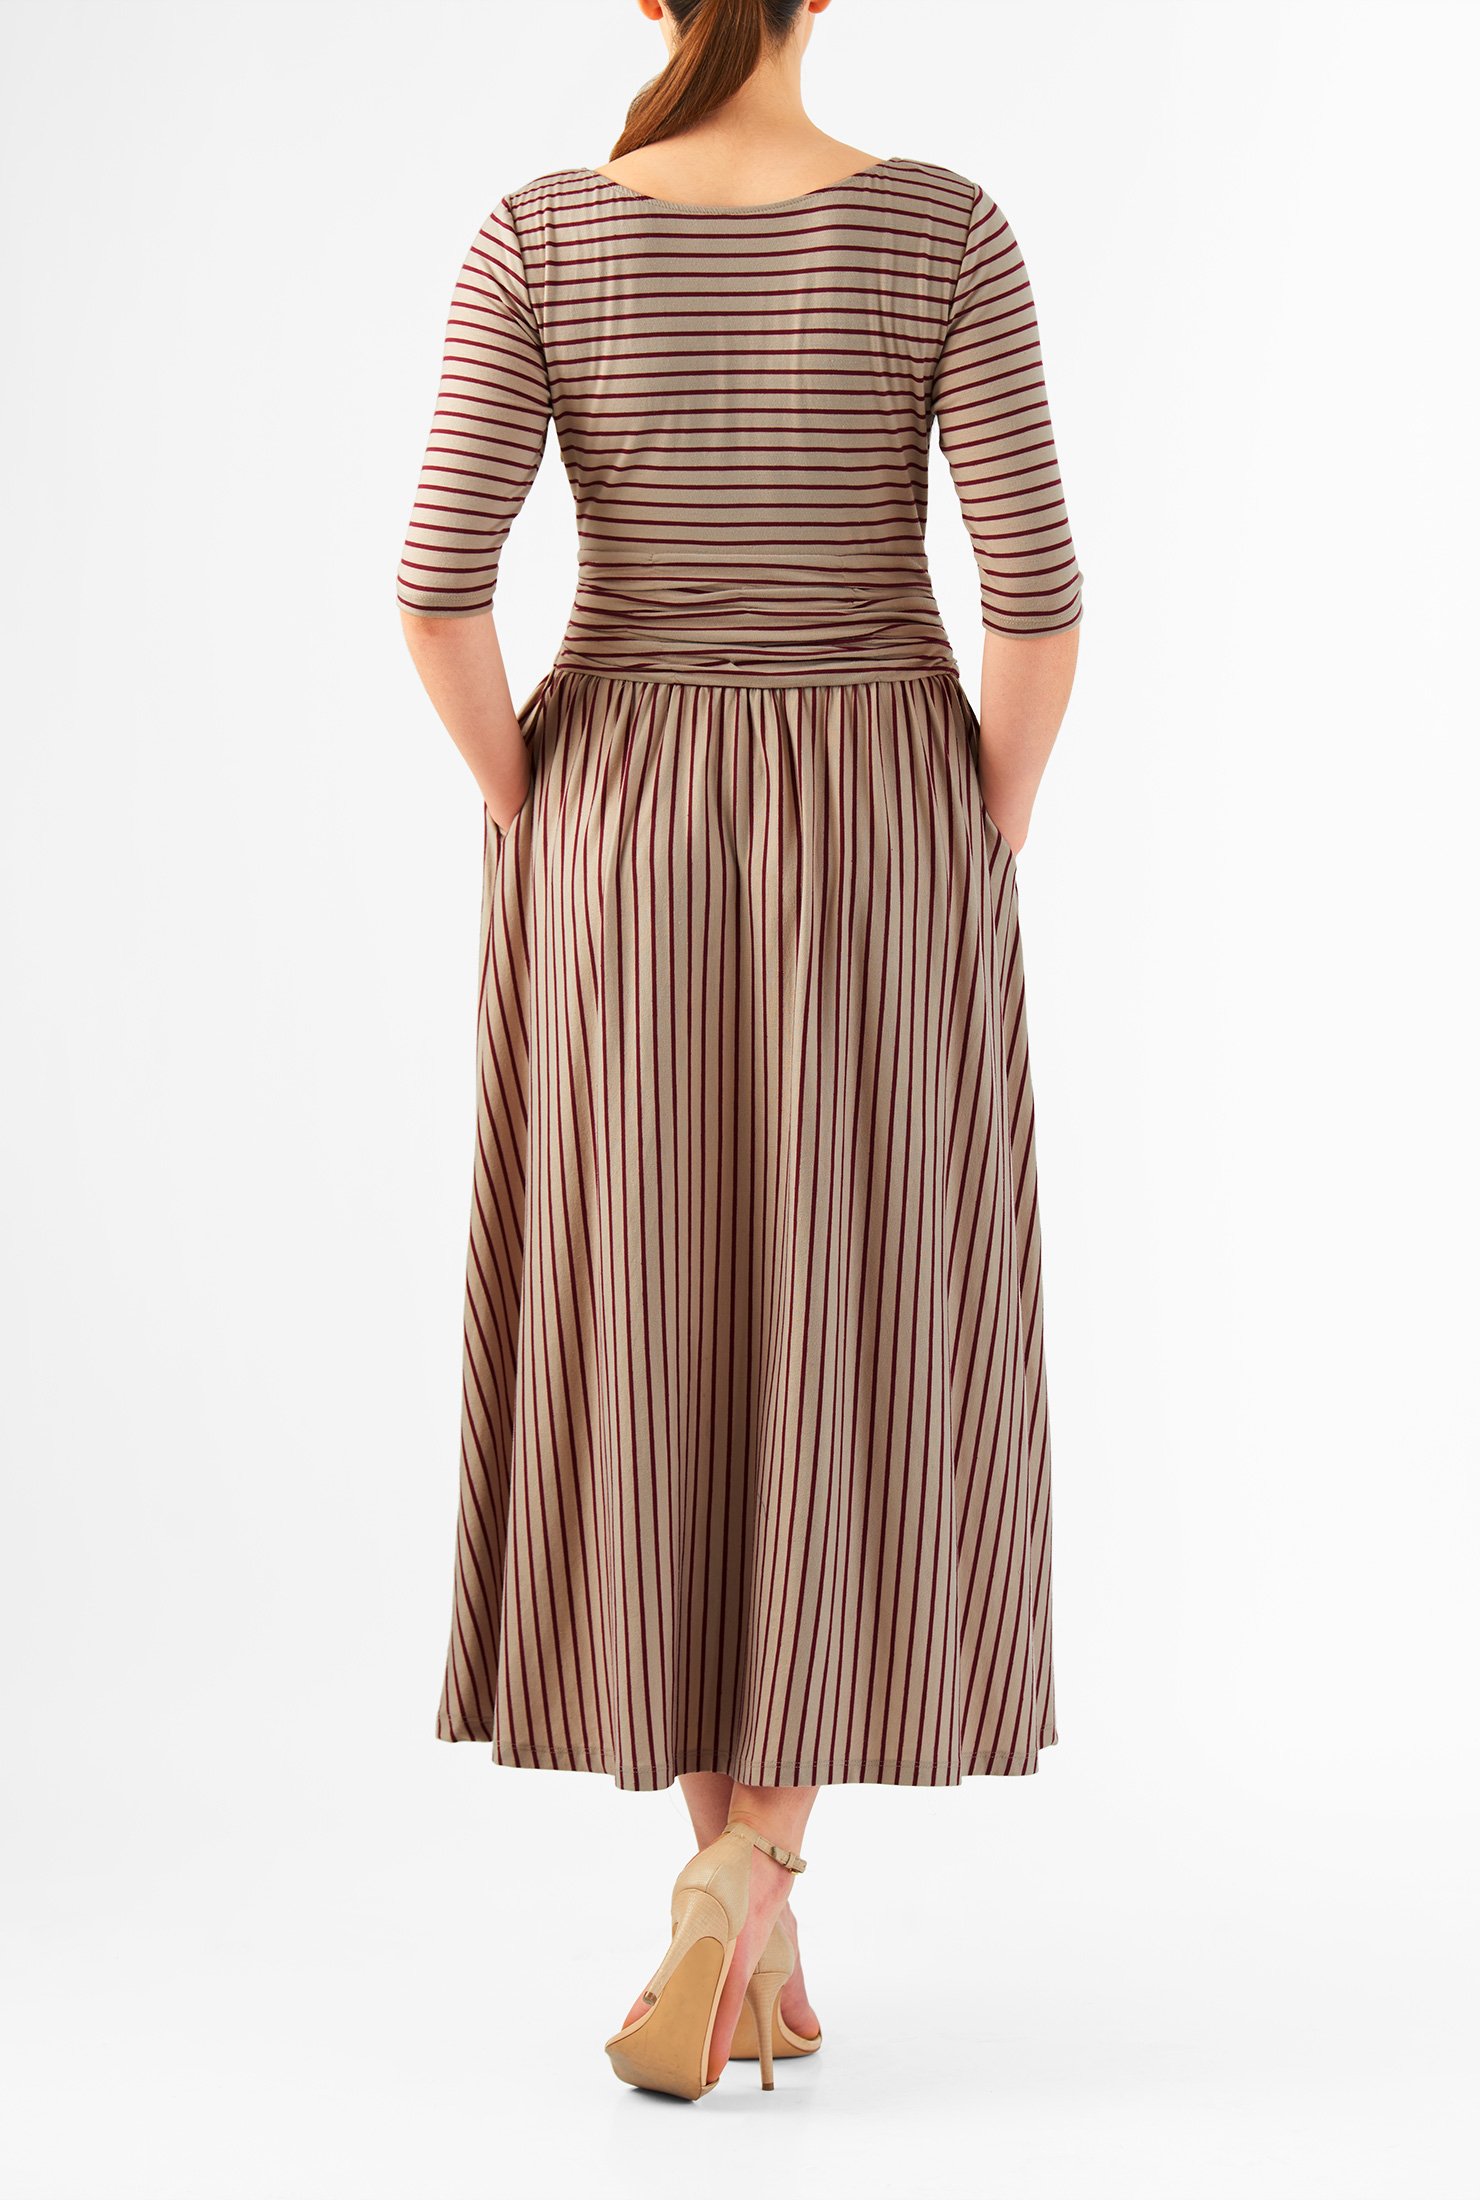 Shop Ruched waist stripe cotton knit midi dress eShakti